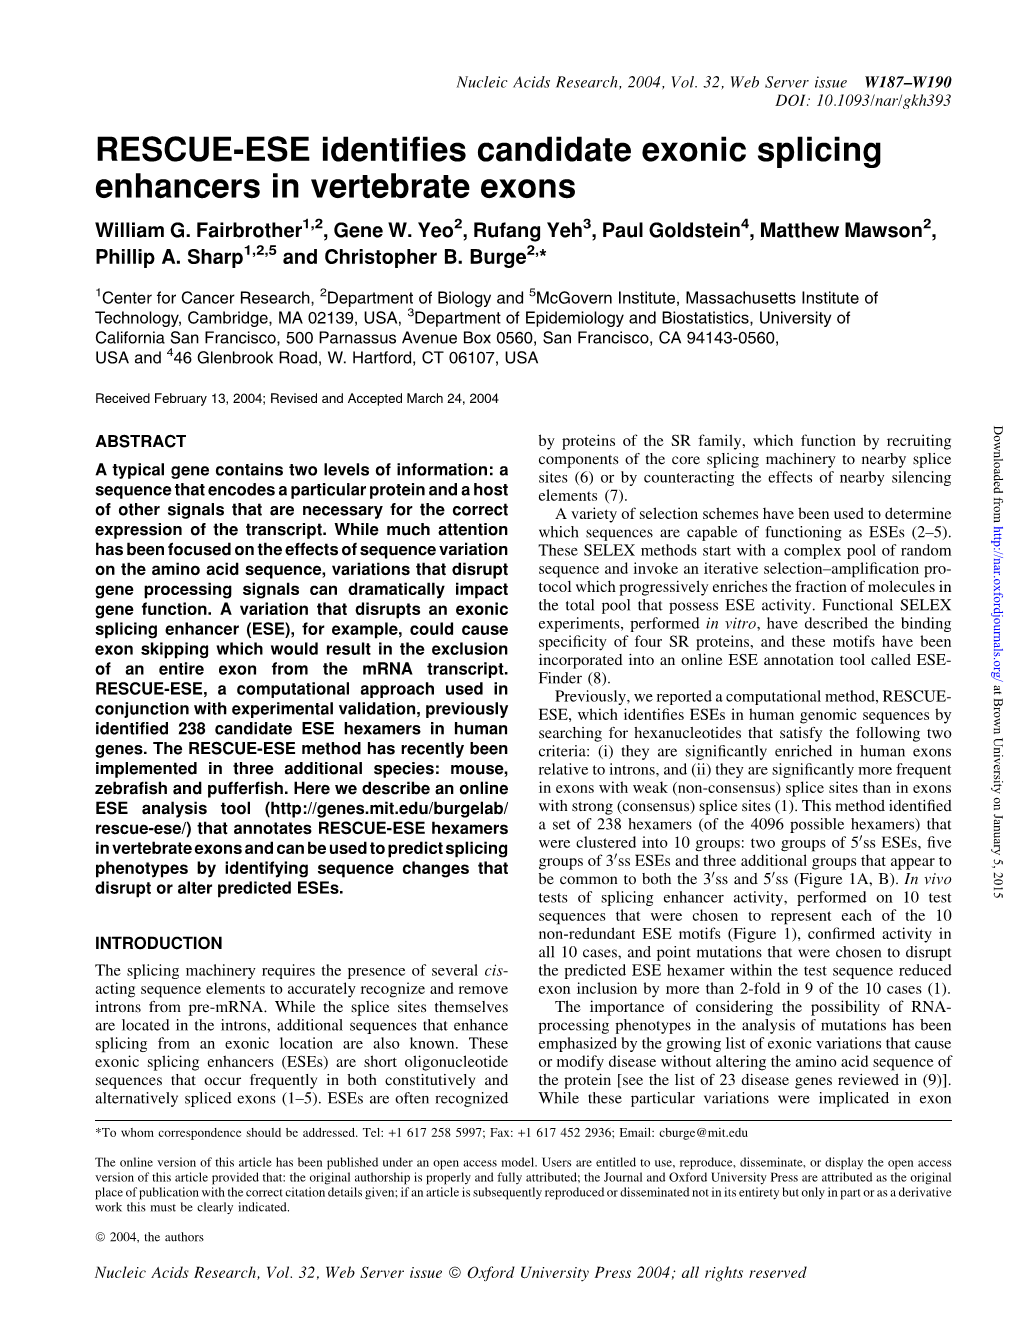 RESCUE-ESE Identifies Candidate Exonic Splicing Enhancers in Vertebrate Exons William G